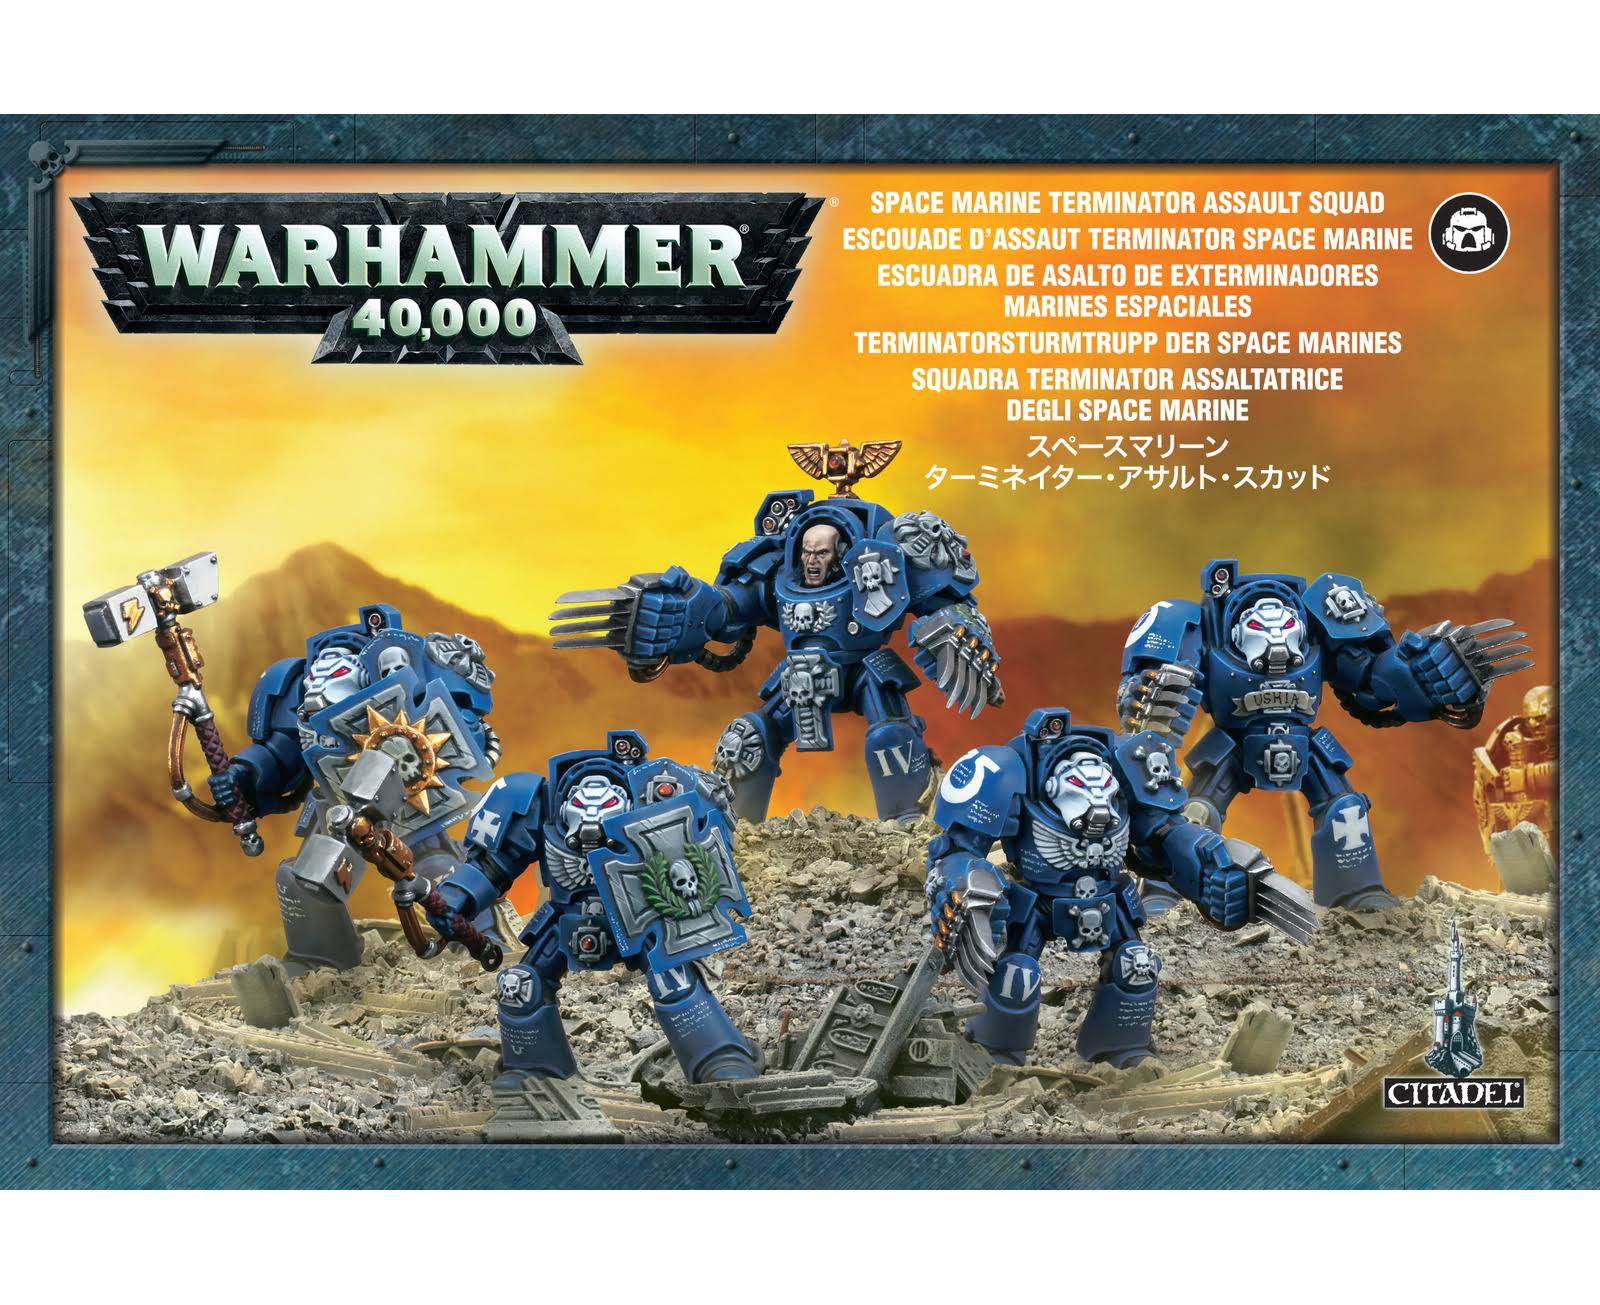 Warhammer 40,000 - Space Marines - Terminator Assault Squad